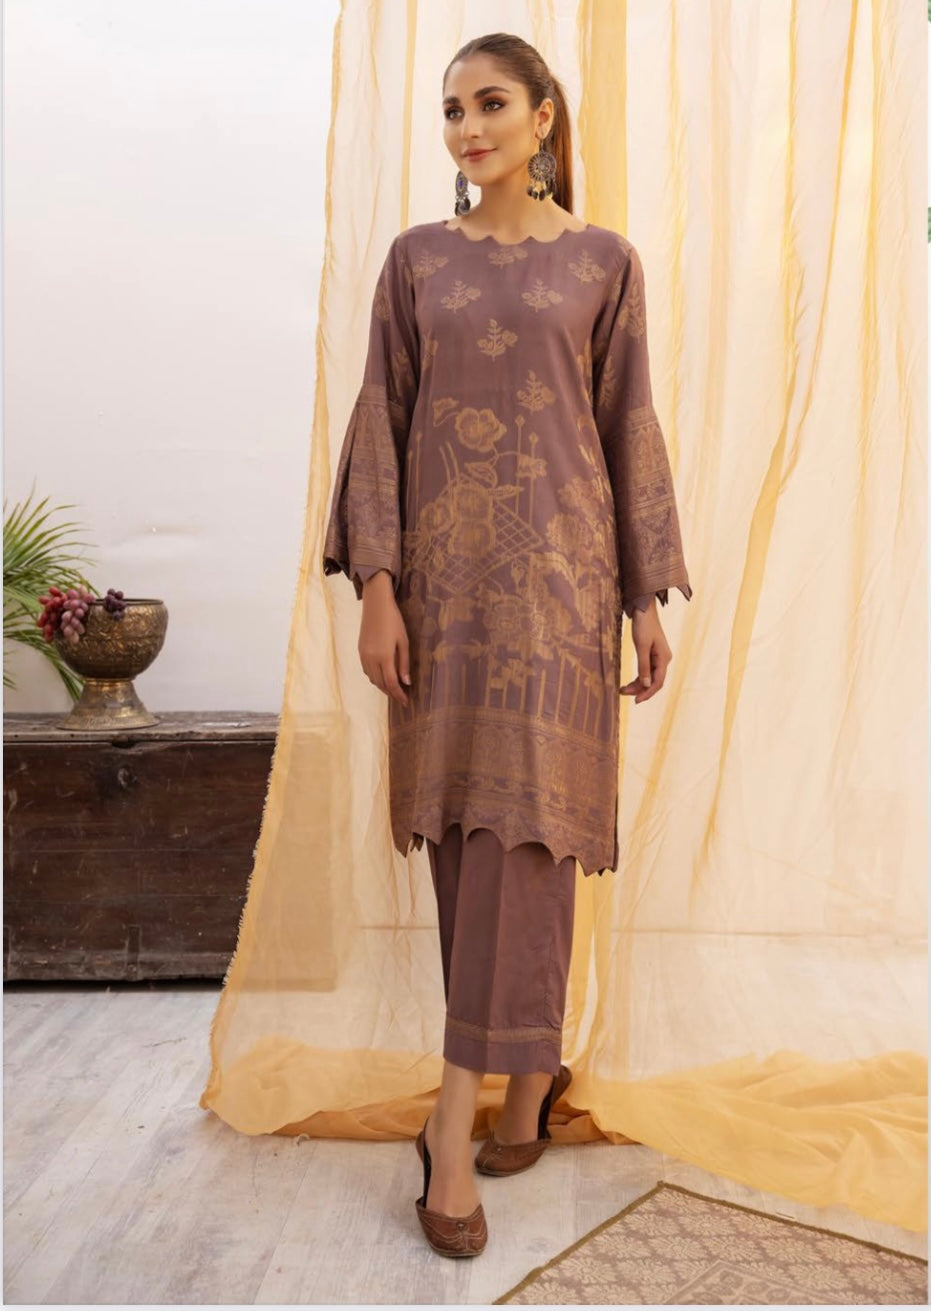  Johra - Pakistani clothes